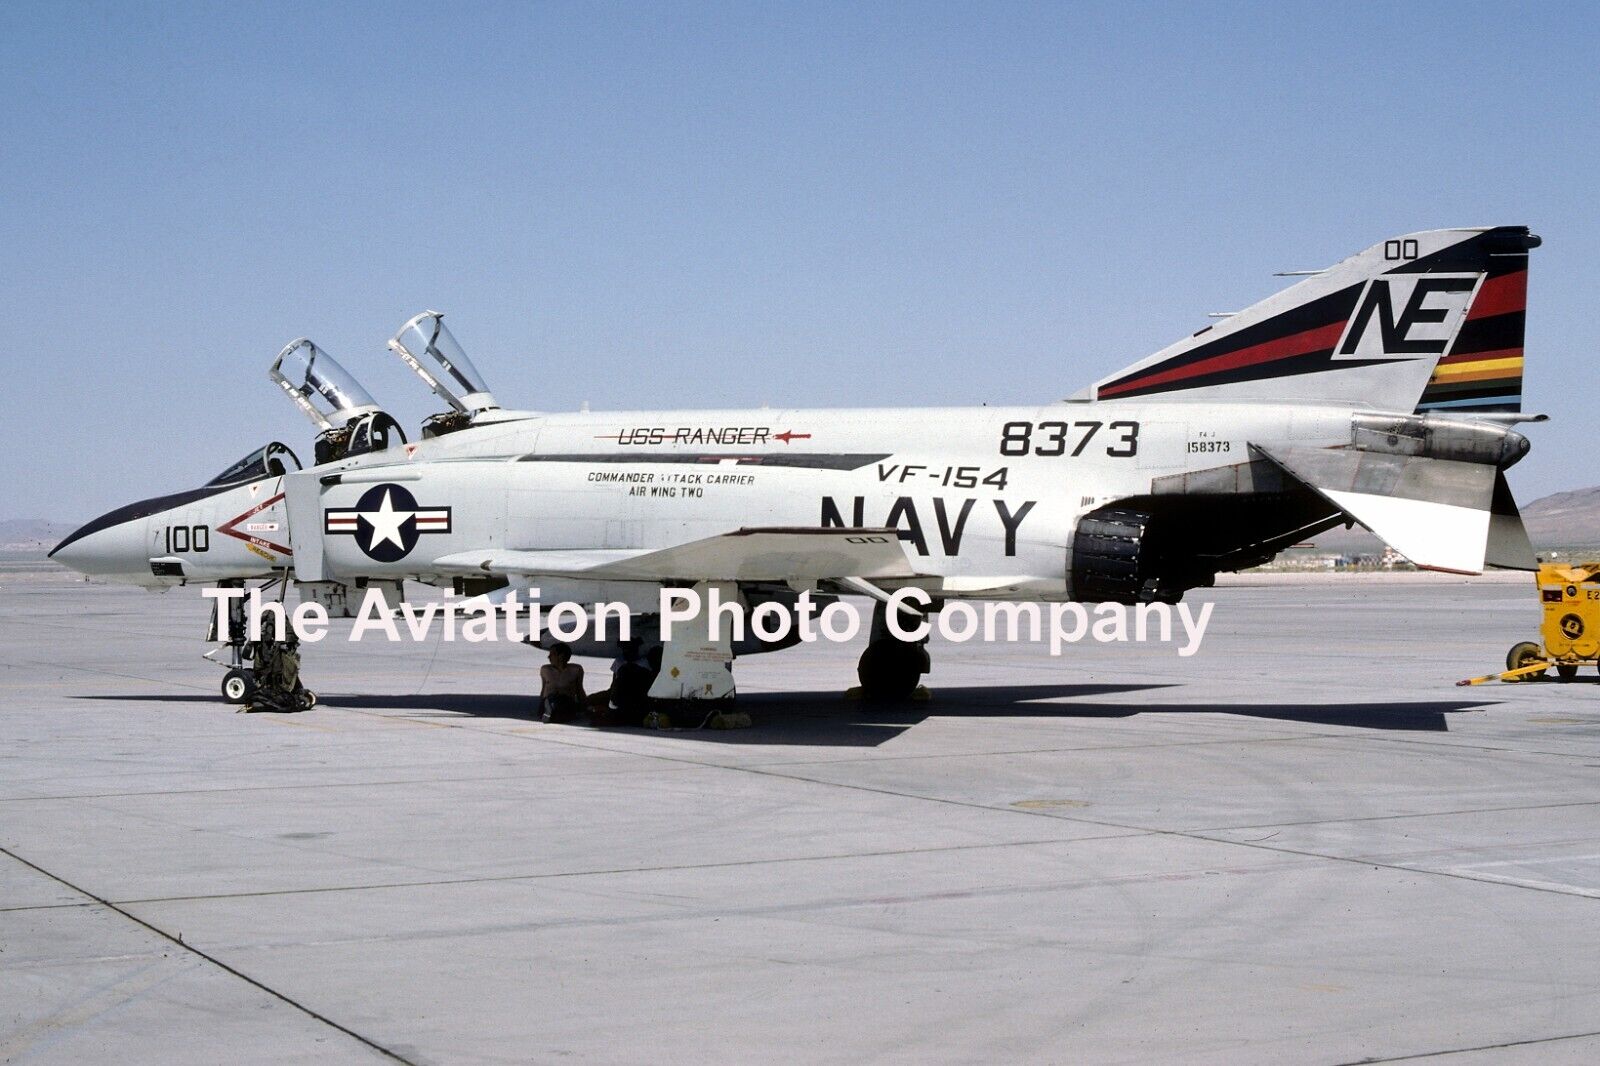 US Navy VF-154 McDonnell F-4J Phantom 158373/NE-100 (1975) Photograph